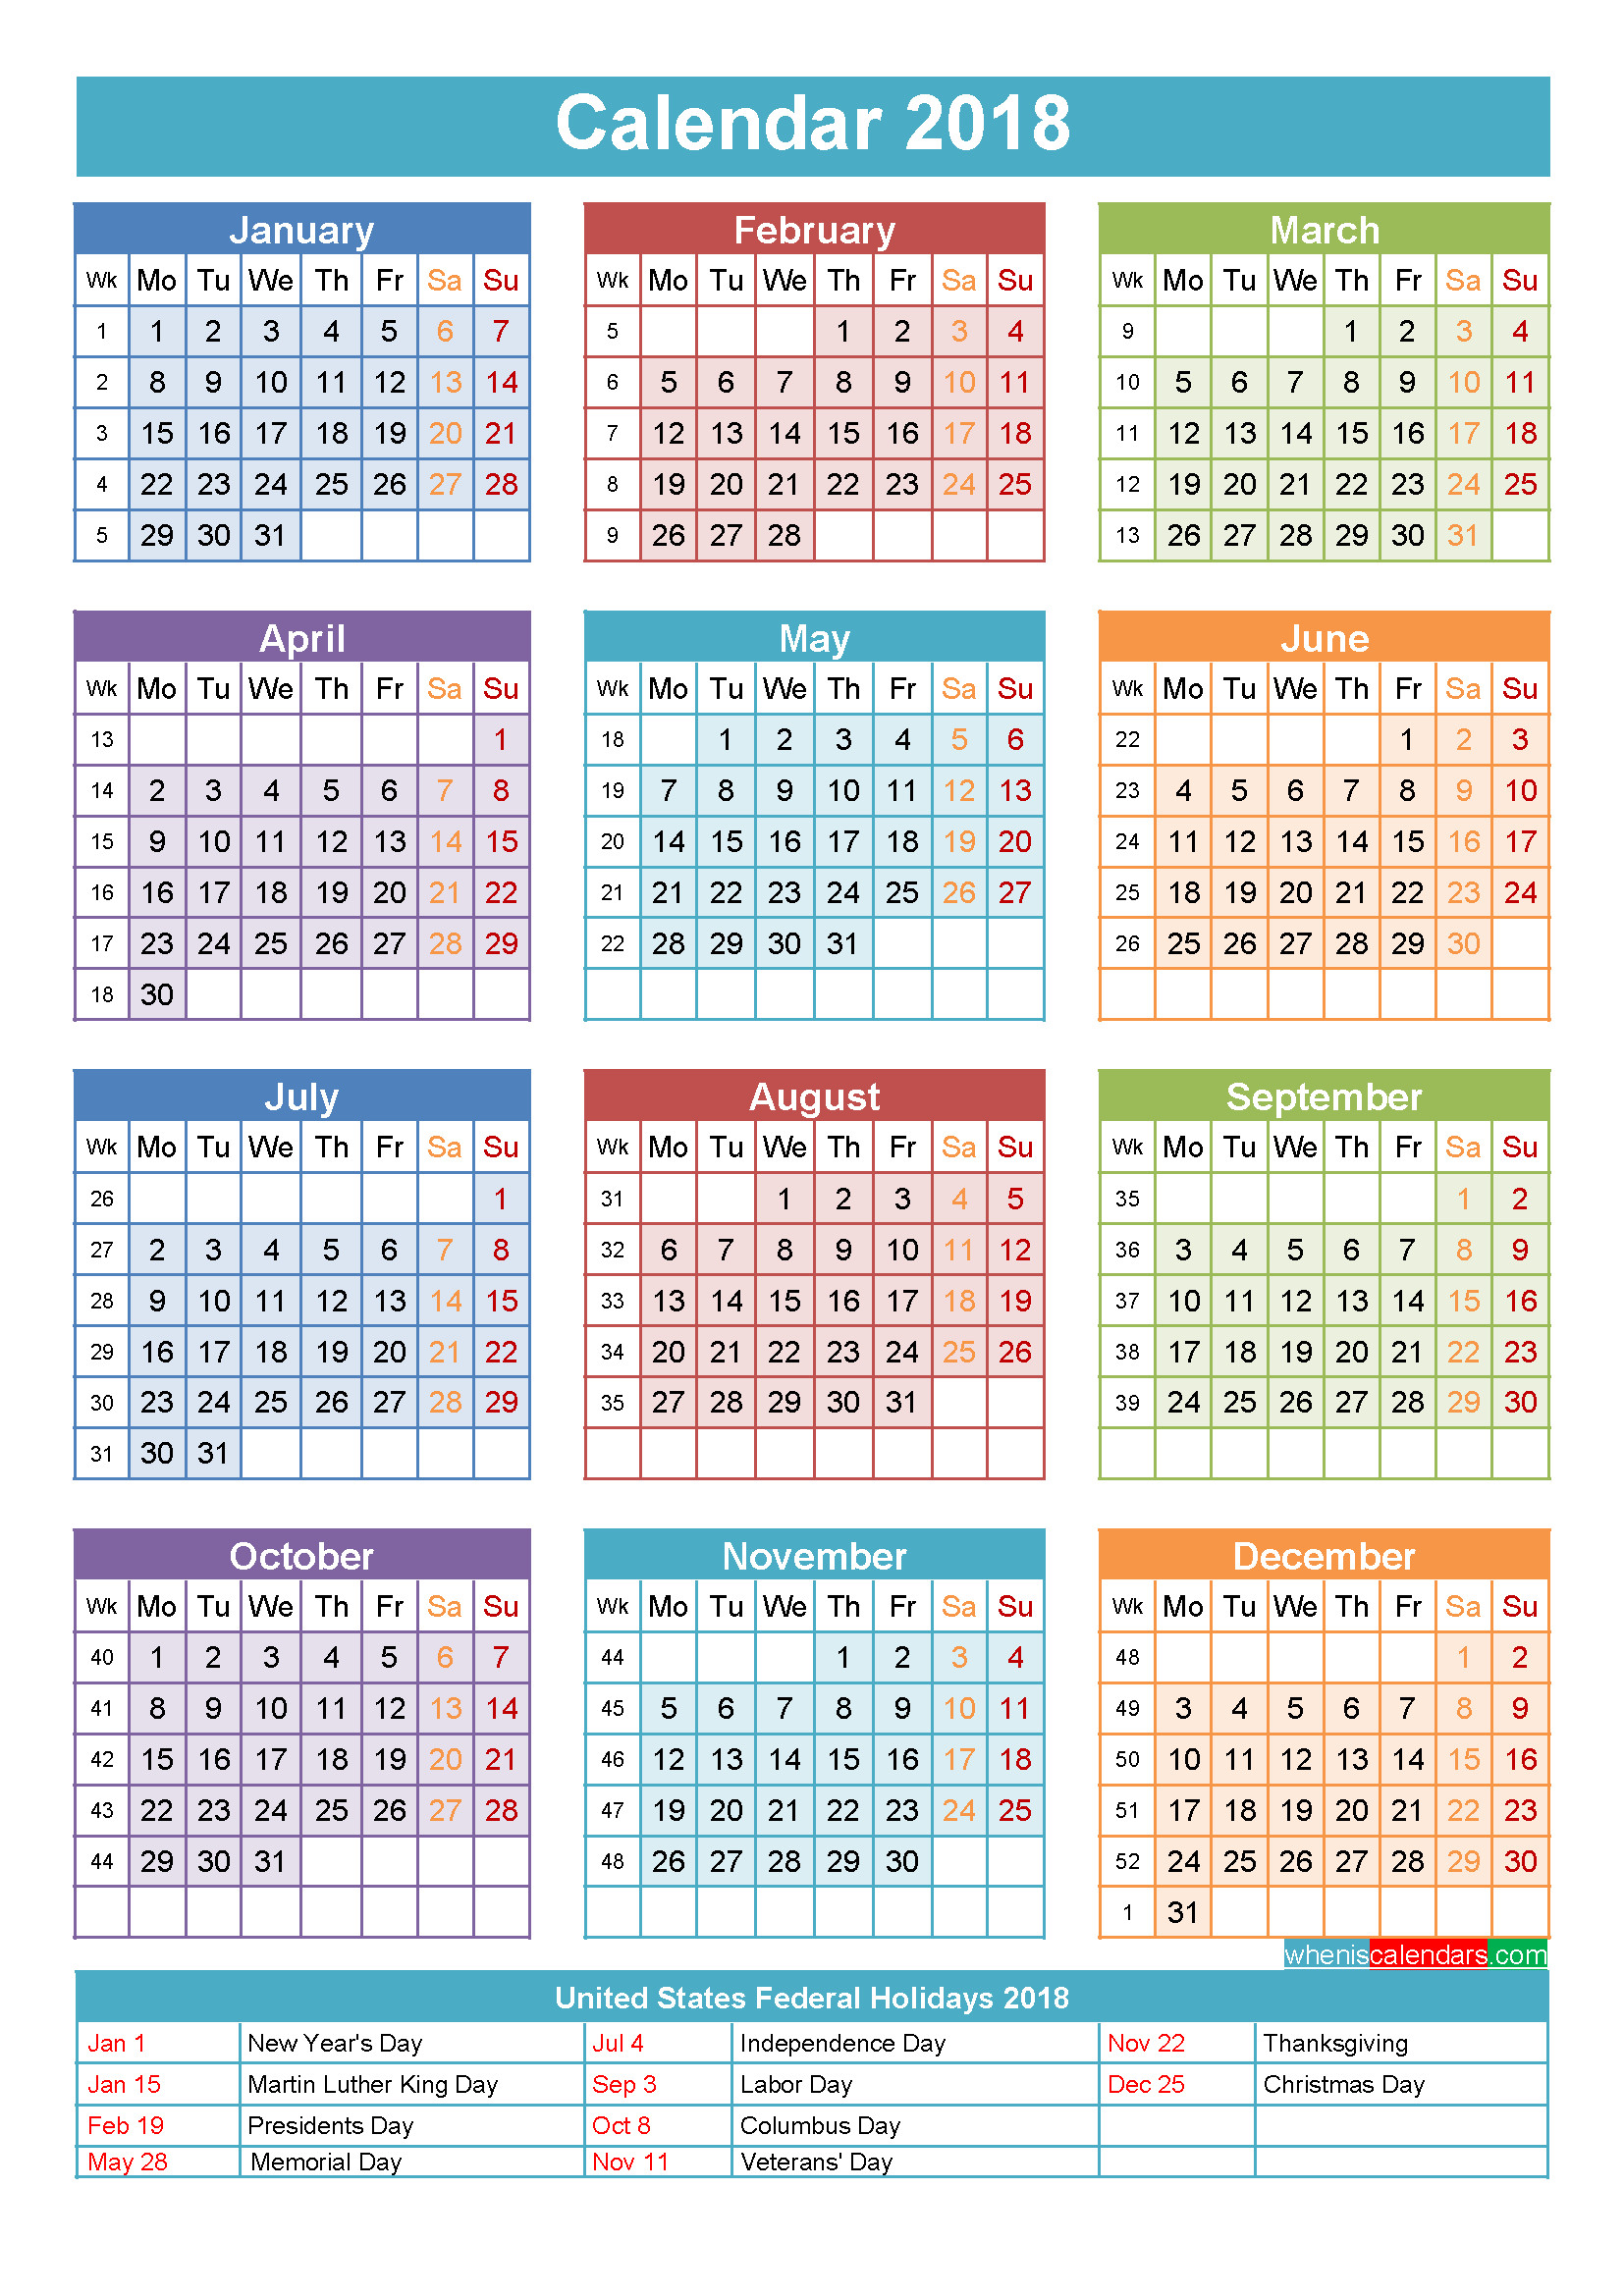 Wallpaper Calendars for 2018 61 images